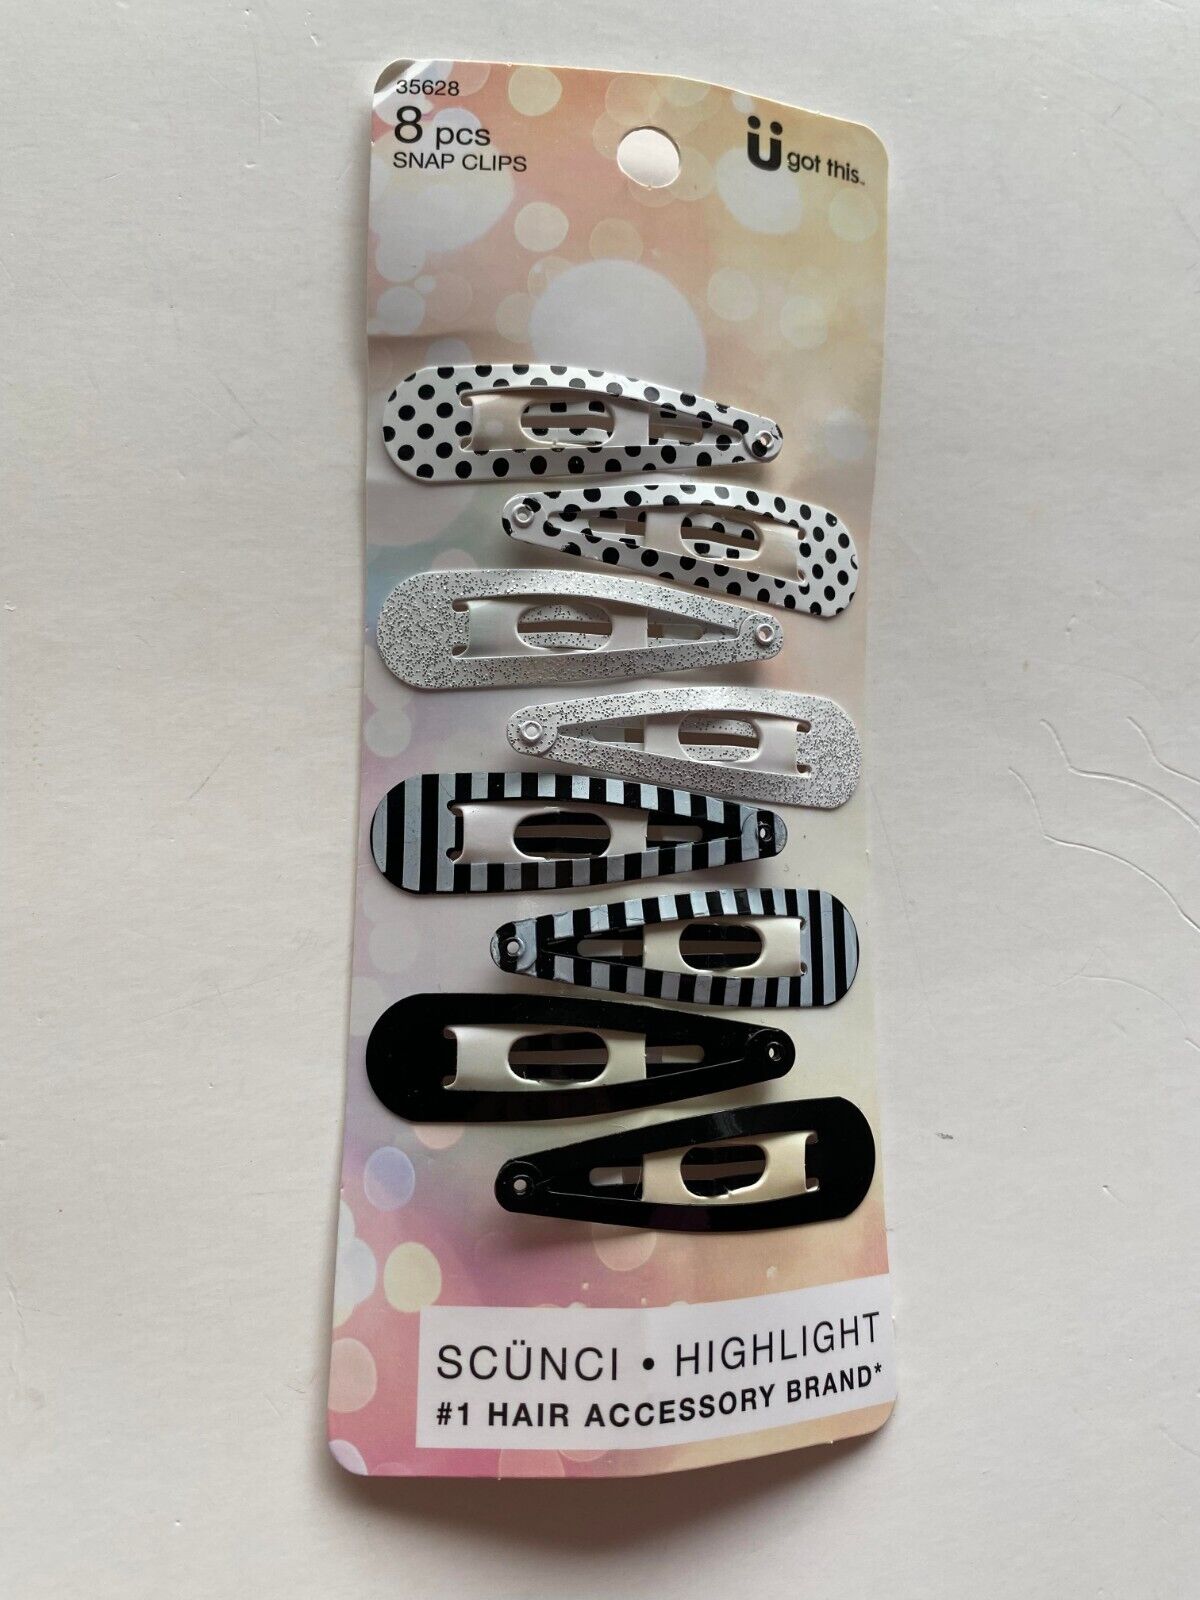 Scunci snap clips ( 8 pieces ) 35628 Women Girls hair clip beautiful color